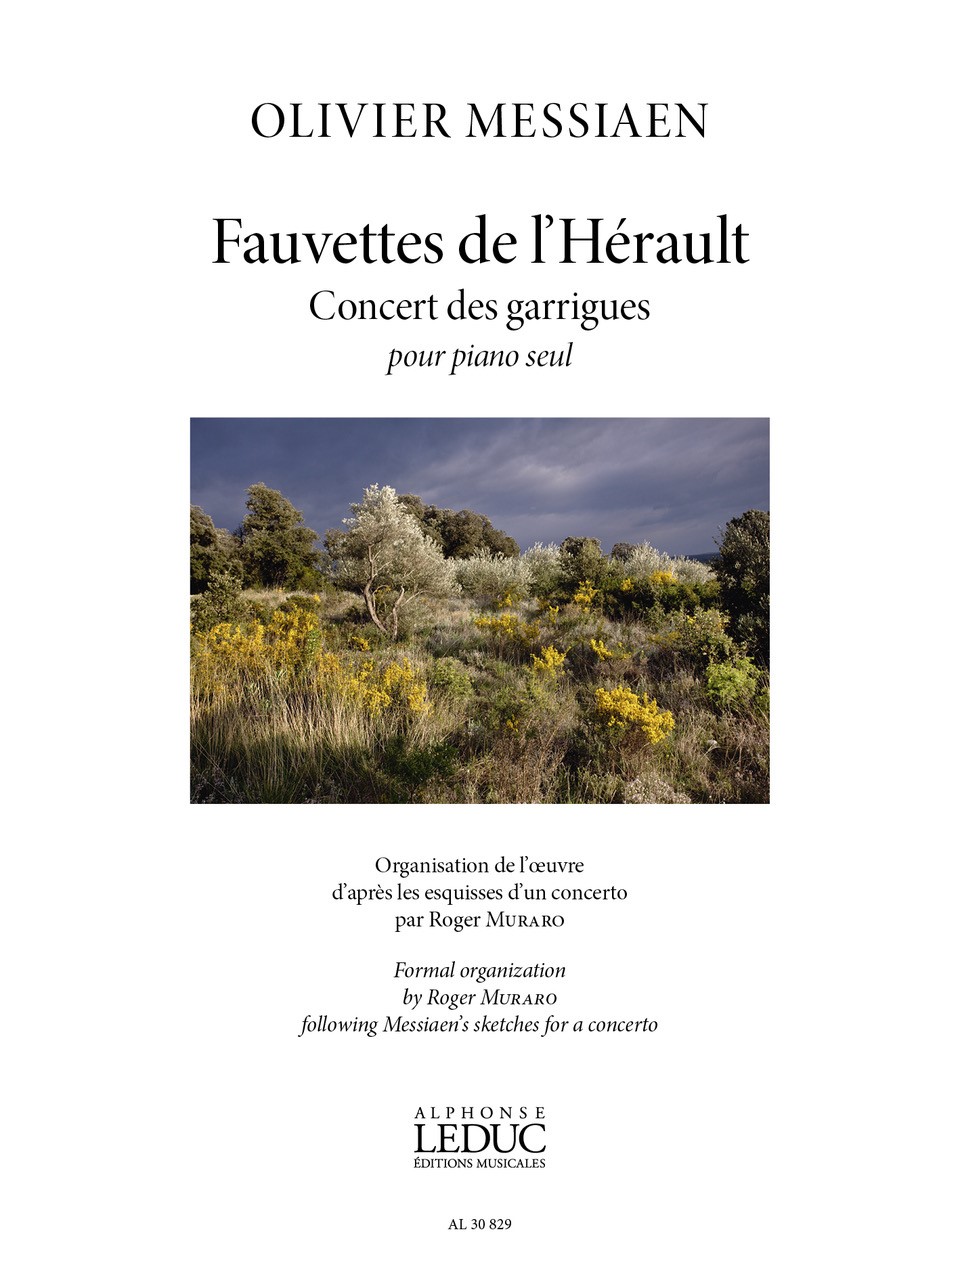 Olivier Messiaen: Les Fauvettes de l'Hrault- Concert des Garrigues: Piano: